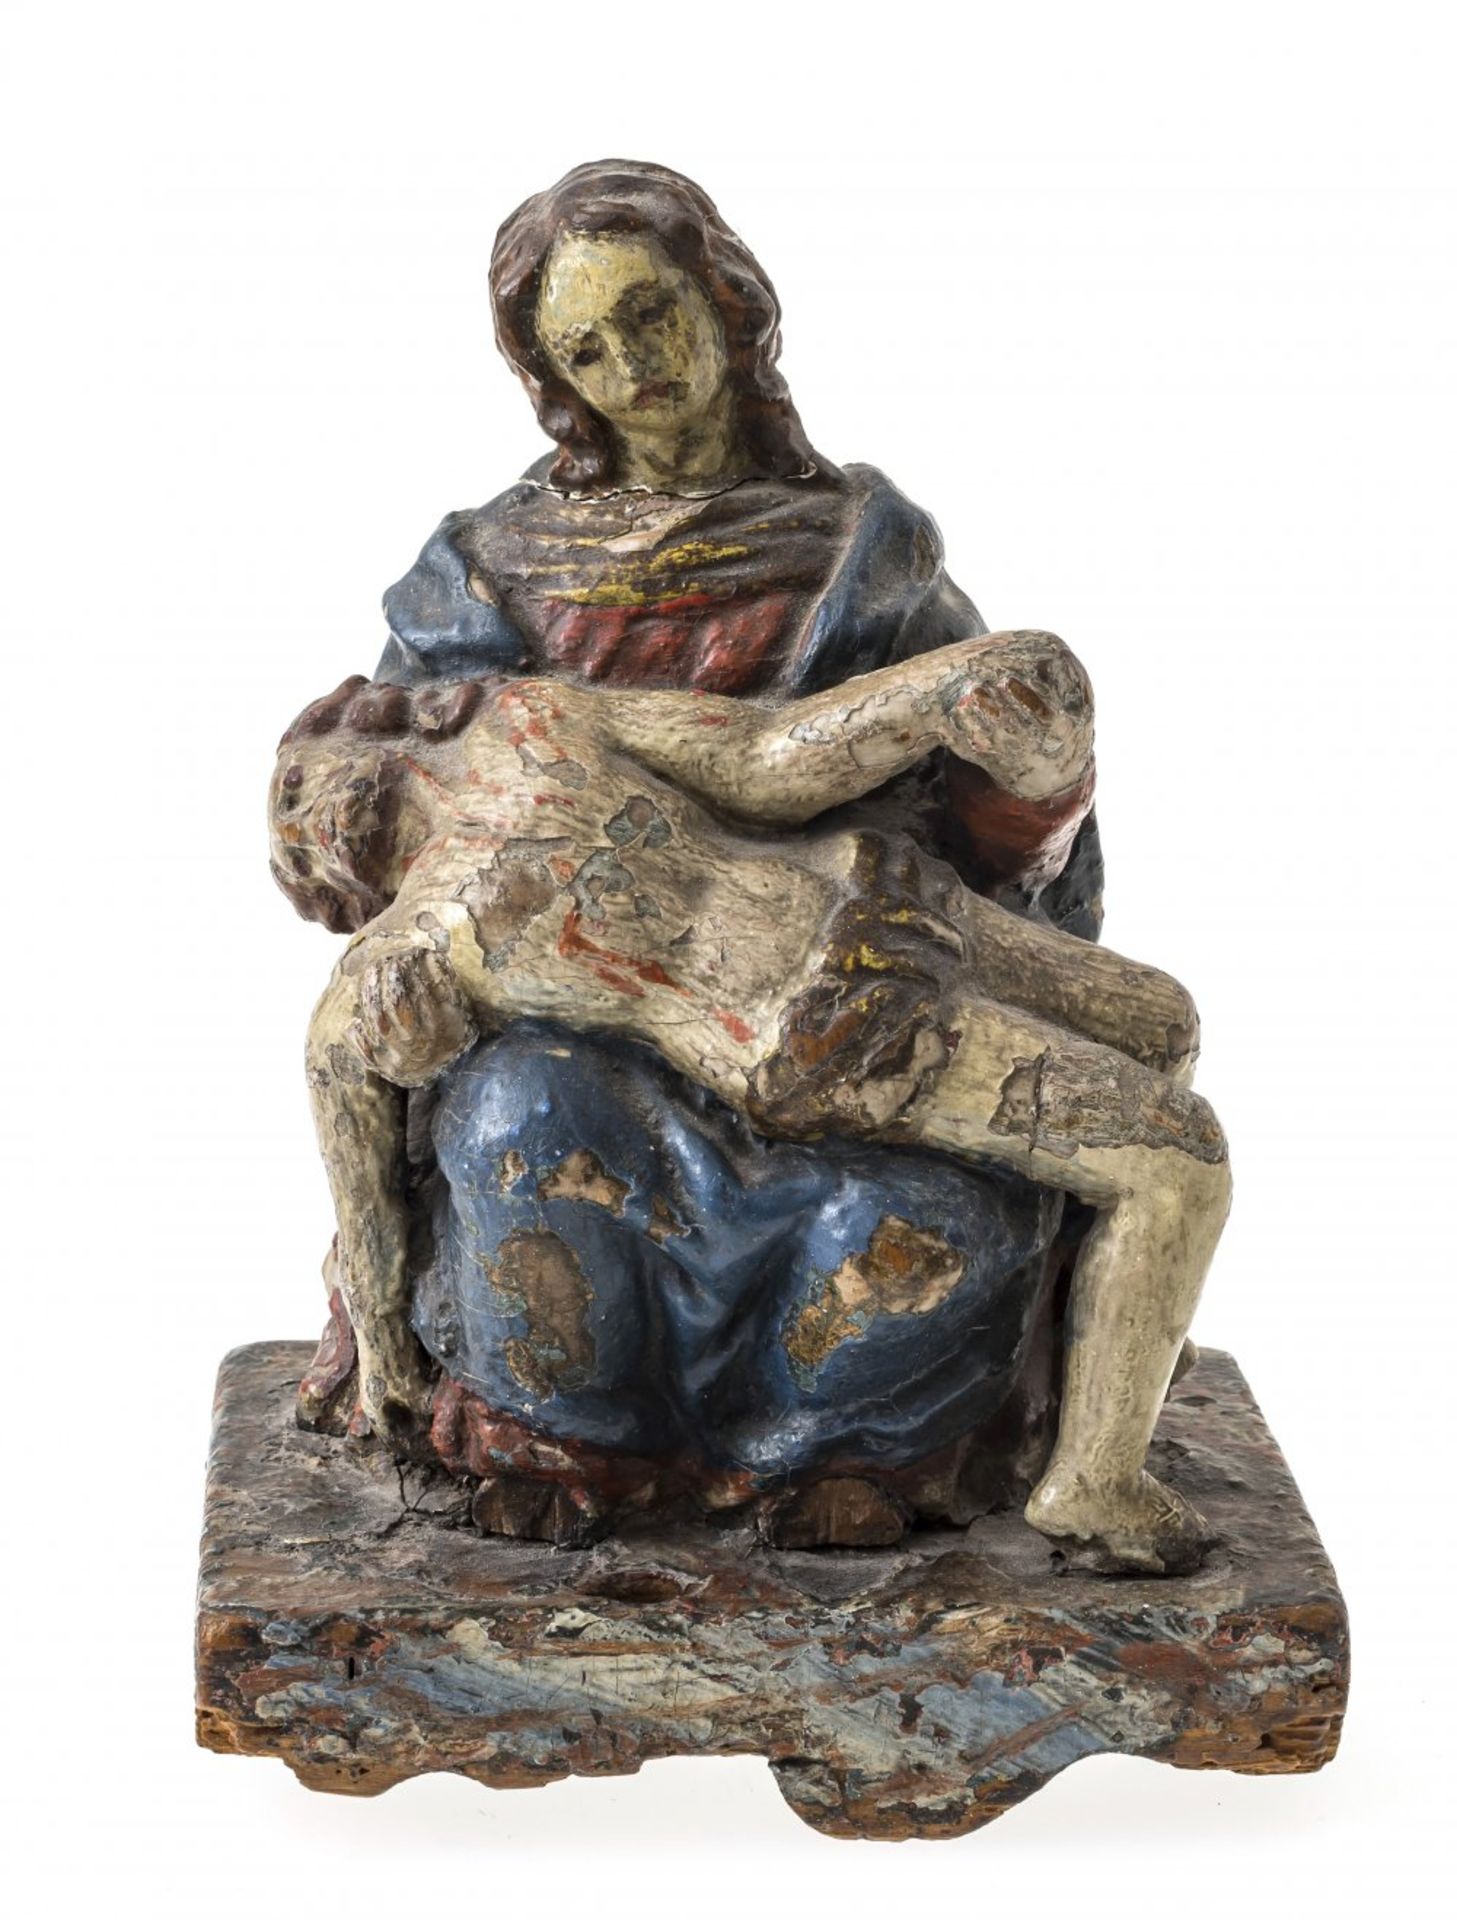 PietàSüddeutsch, 18. Jh. Auf rechteckigem Sockel. Holz, Farbfassung. Besch. H. 17 cm.pitySouth